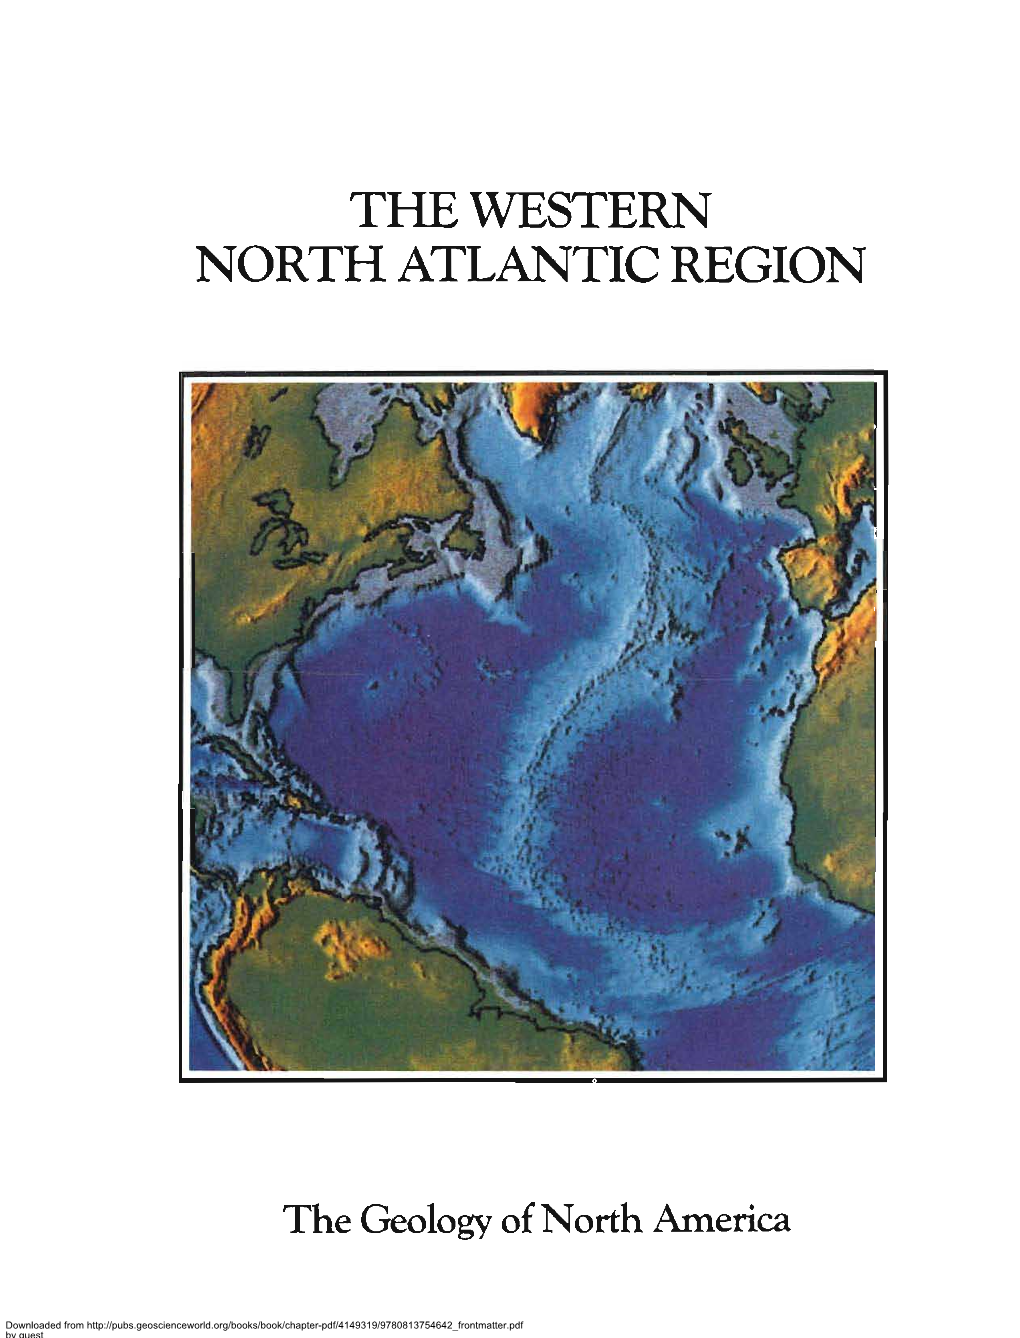 The Western North Atlantic Region